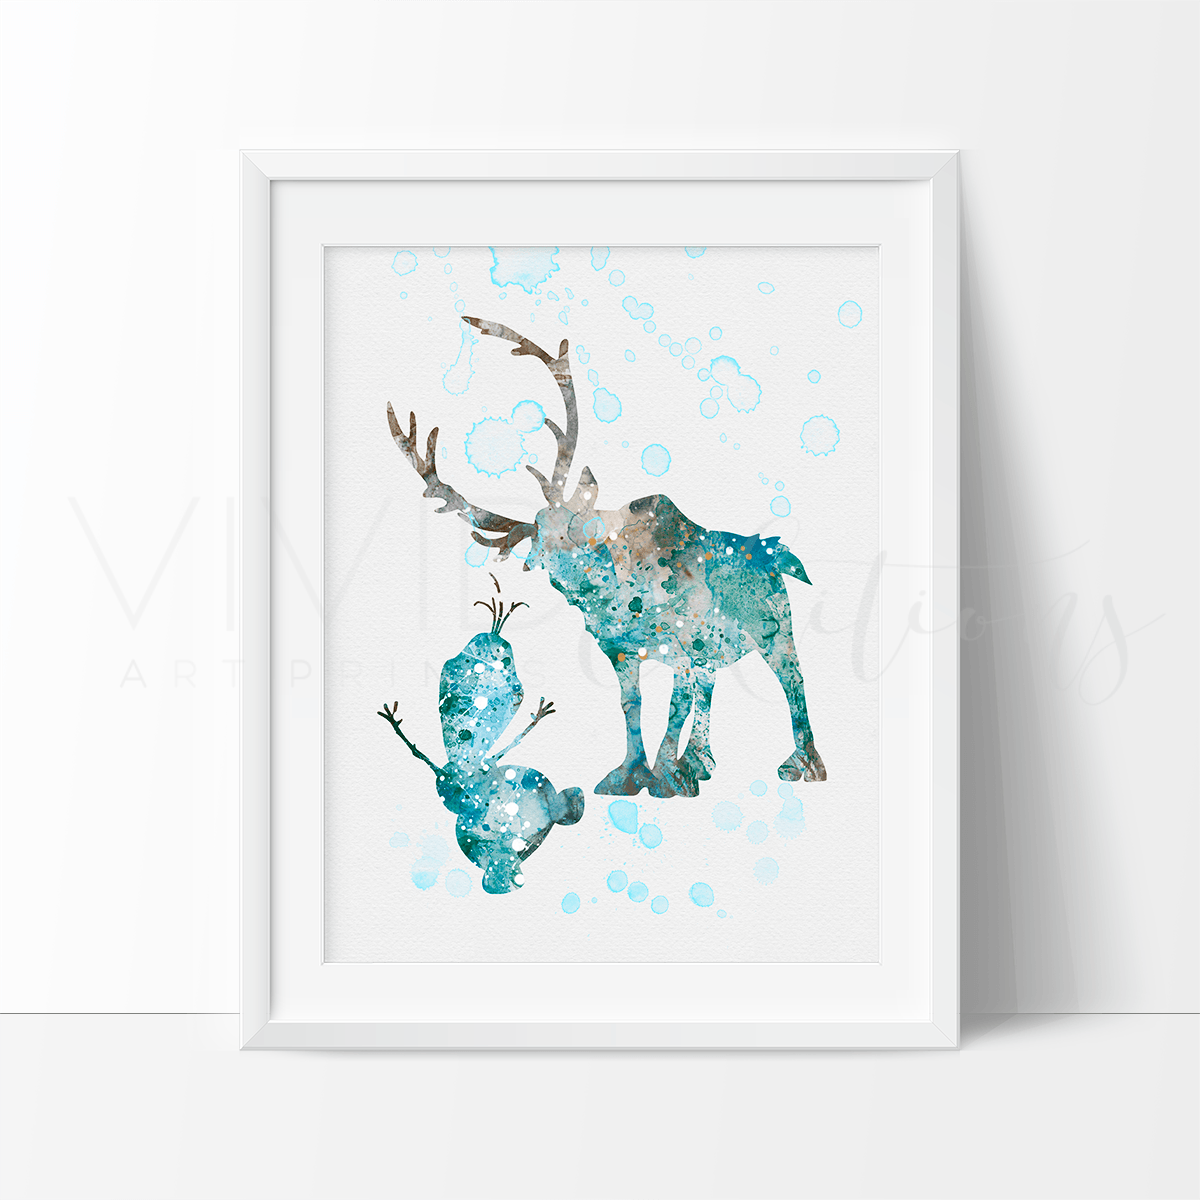 Sven & Olaf, Frozen Watercolor Art Print Print - VividEditions